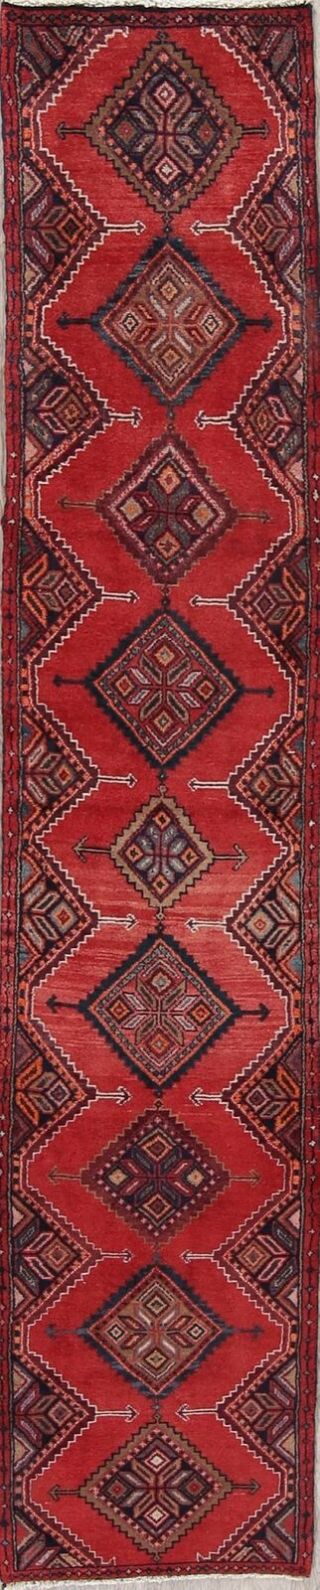 Hamadan Persian Runner Malayer Geometric Wool Rug Oriental Carpet 2x10 Handmade